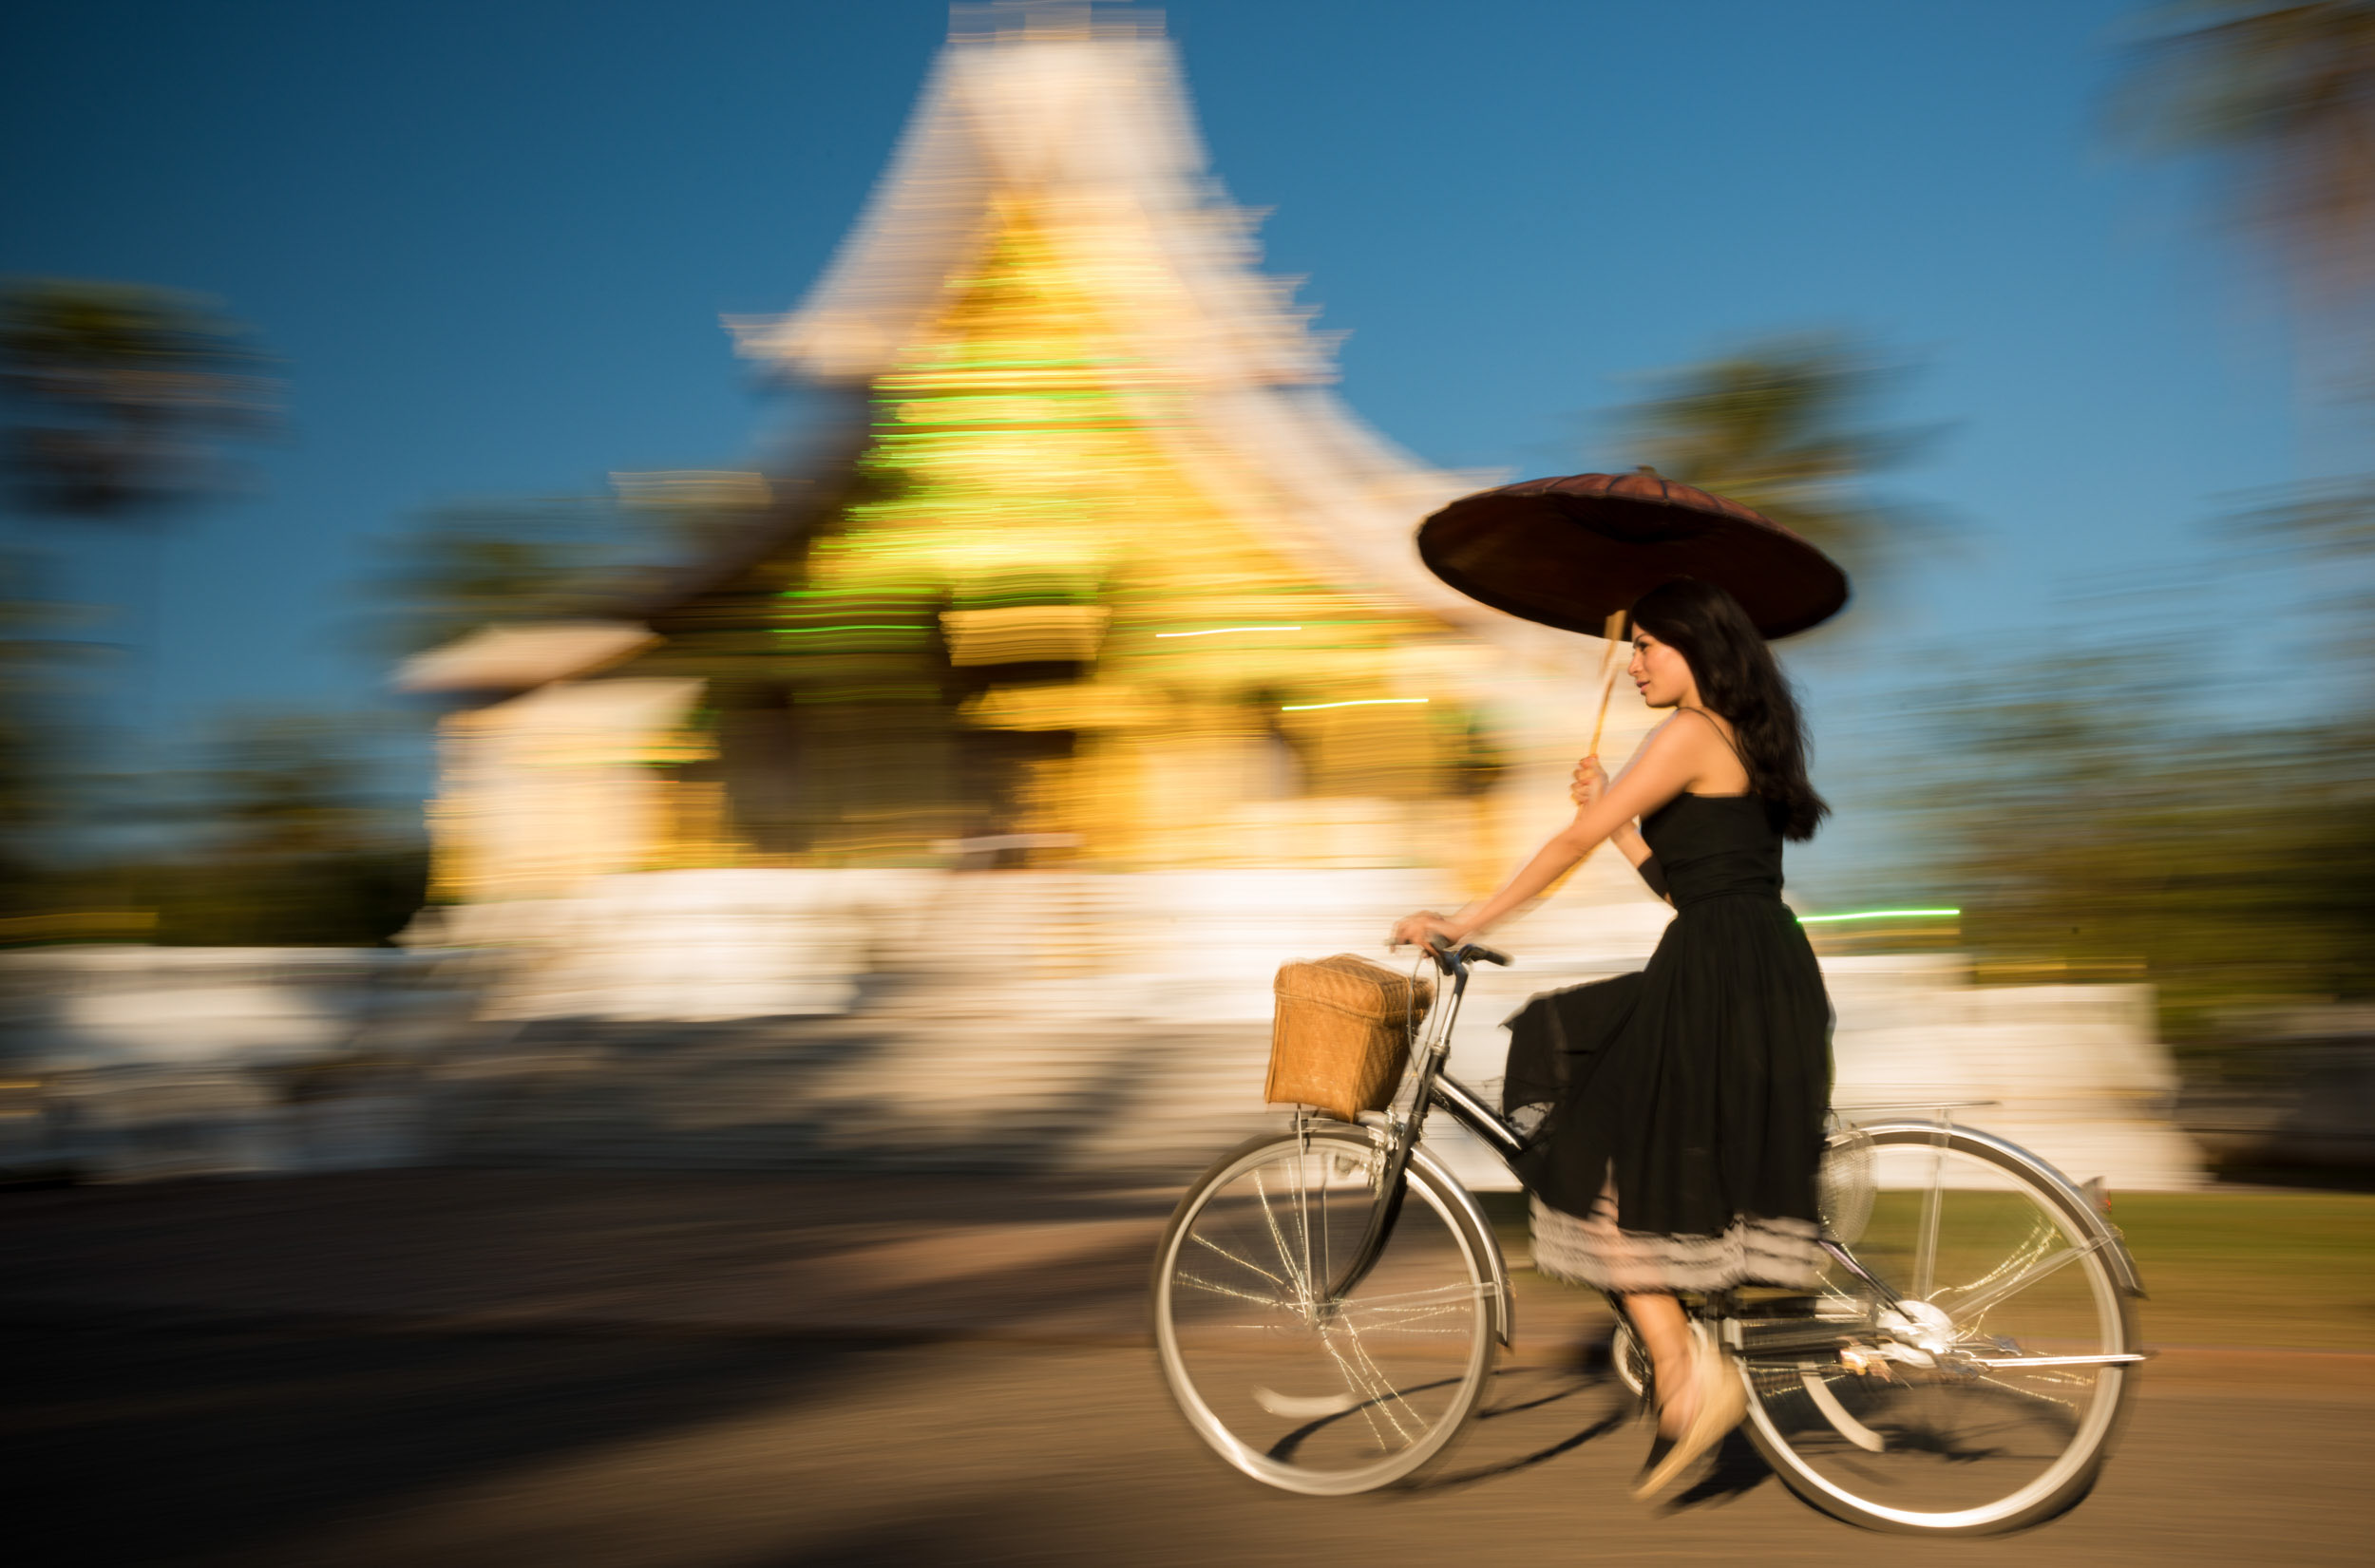 woman-cycling-unbrella-luang-prabang-laos-asia-temple